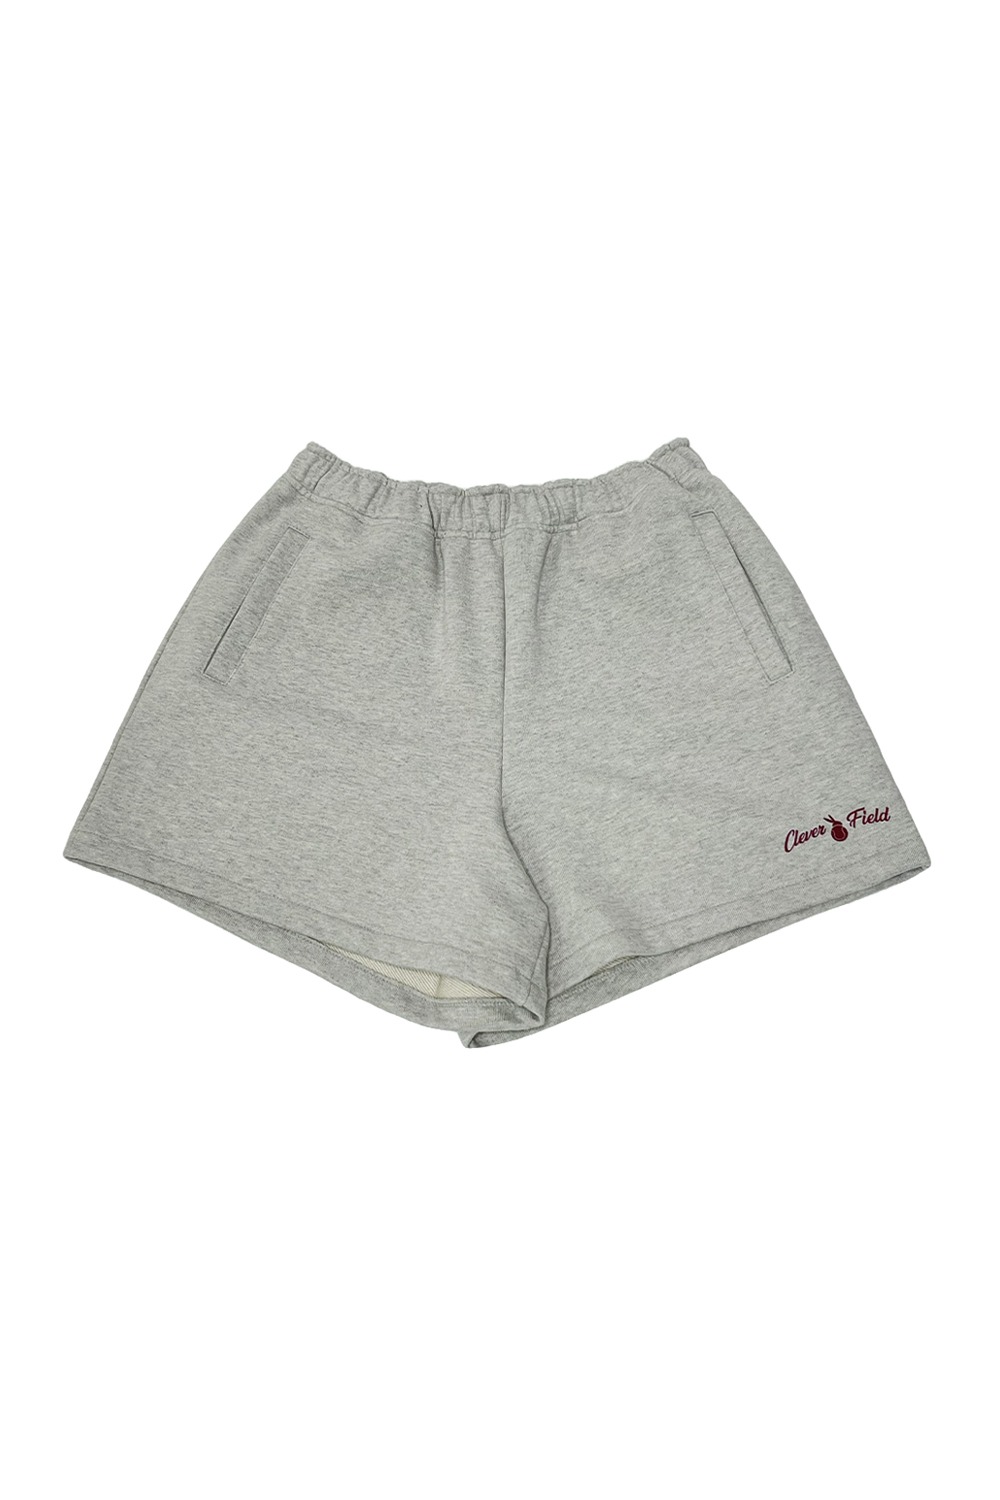 sweat shorts clever logo Woman(Grey) RICHEZ